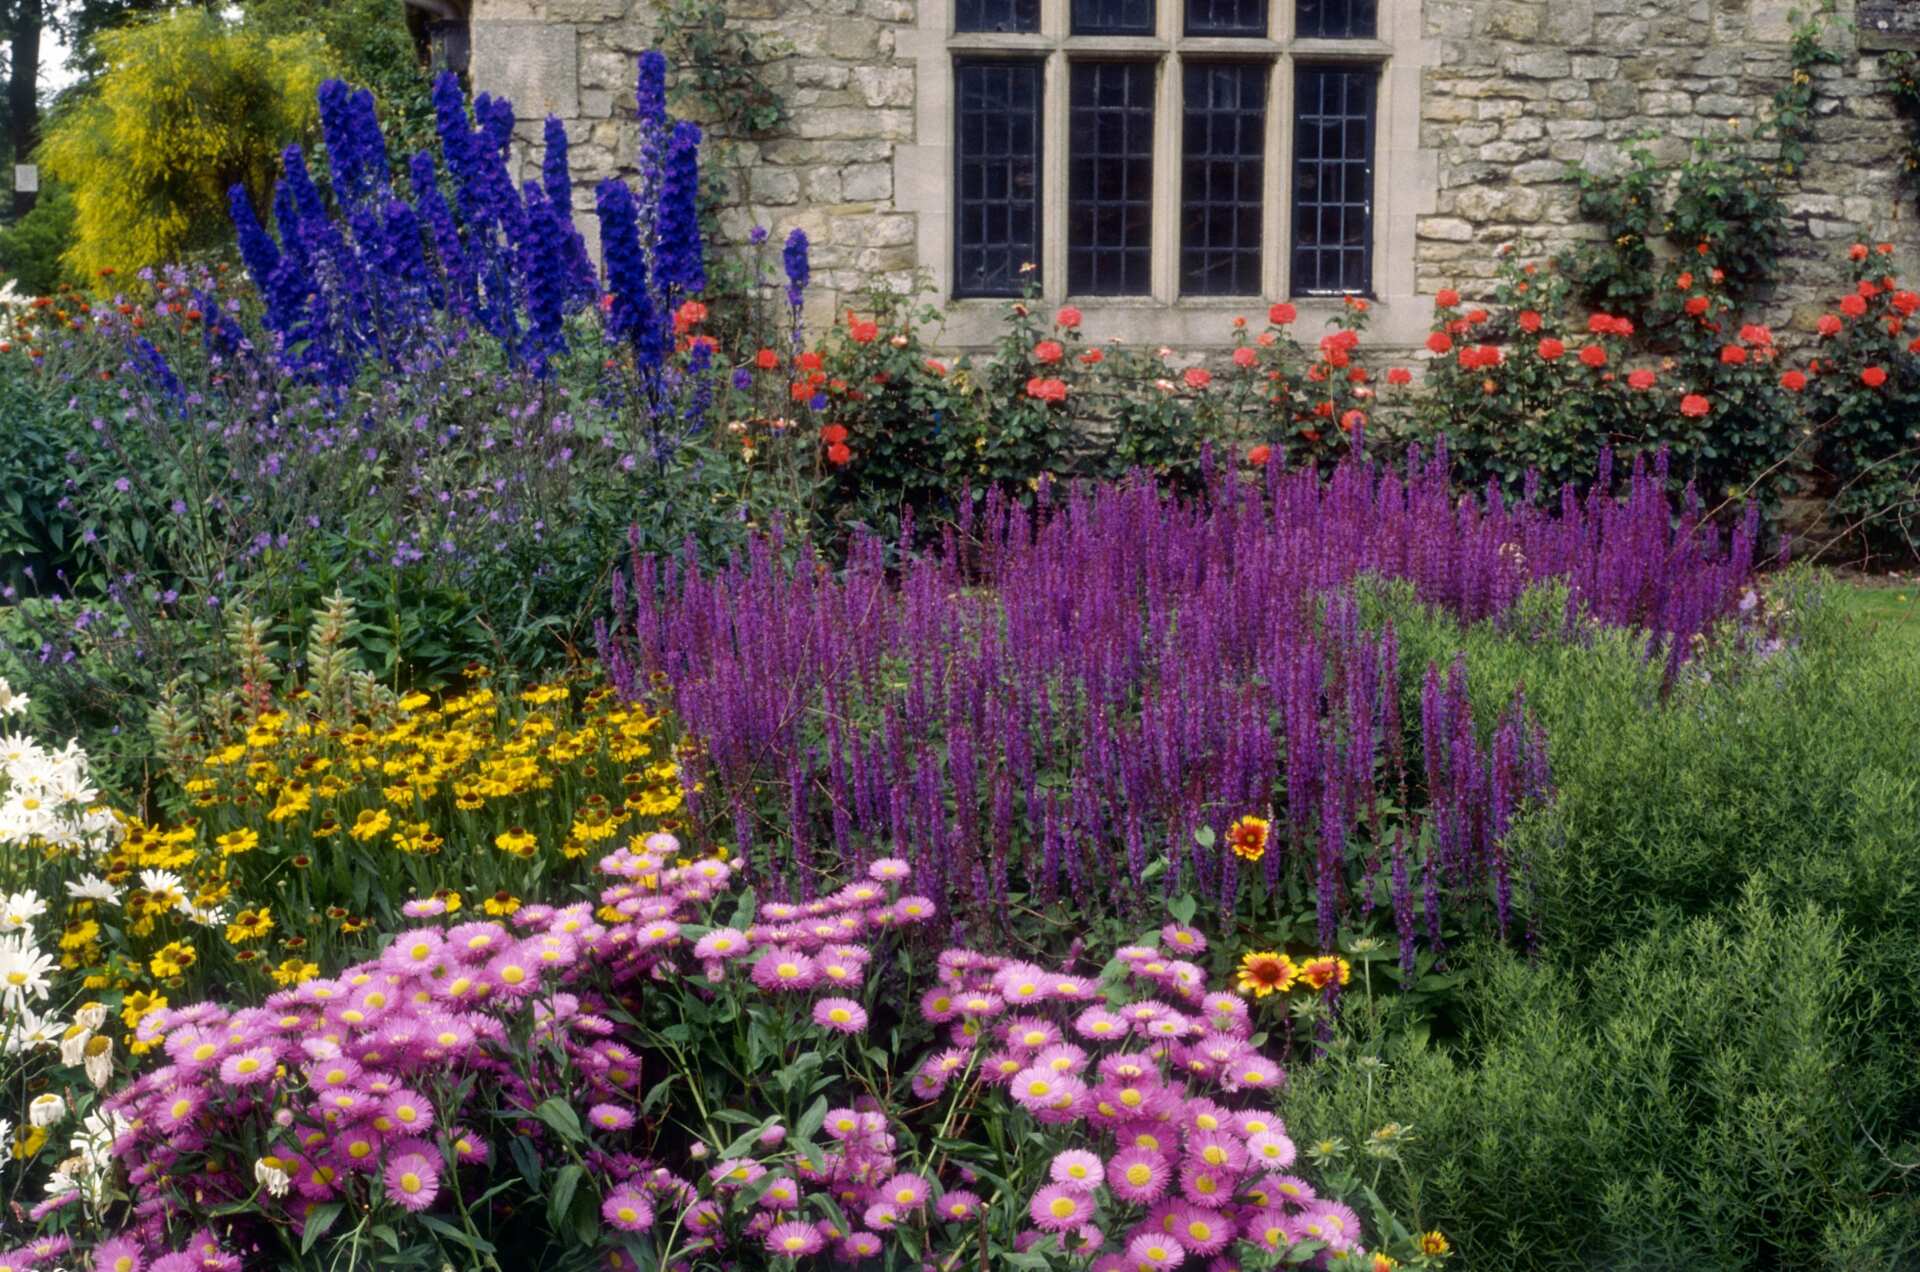 Choosing Flower Colors for Your Landscape Design